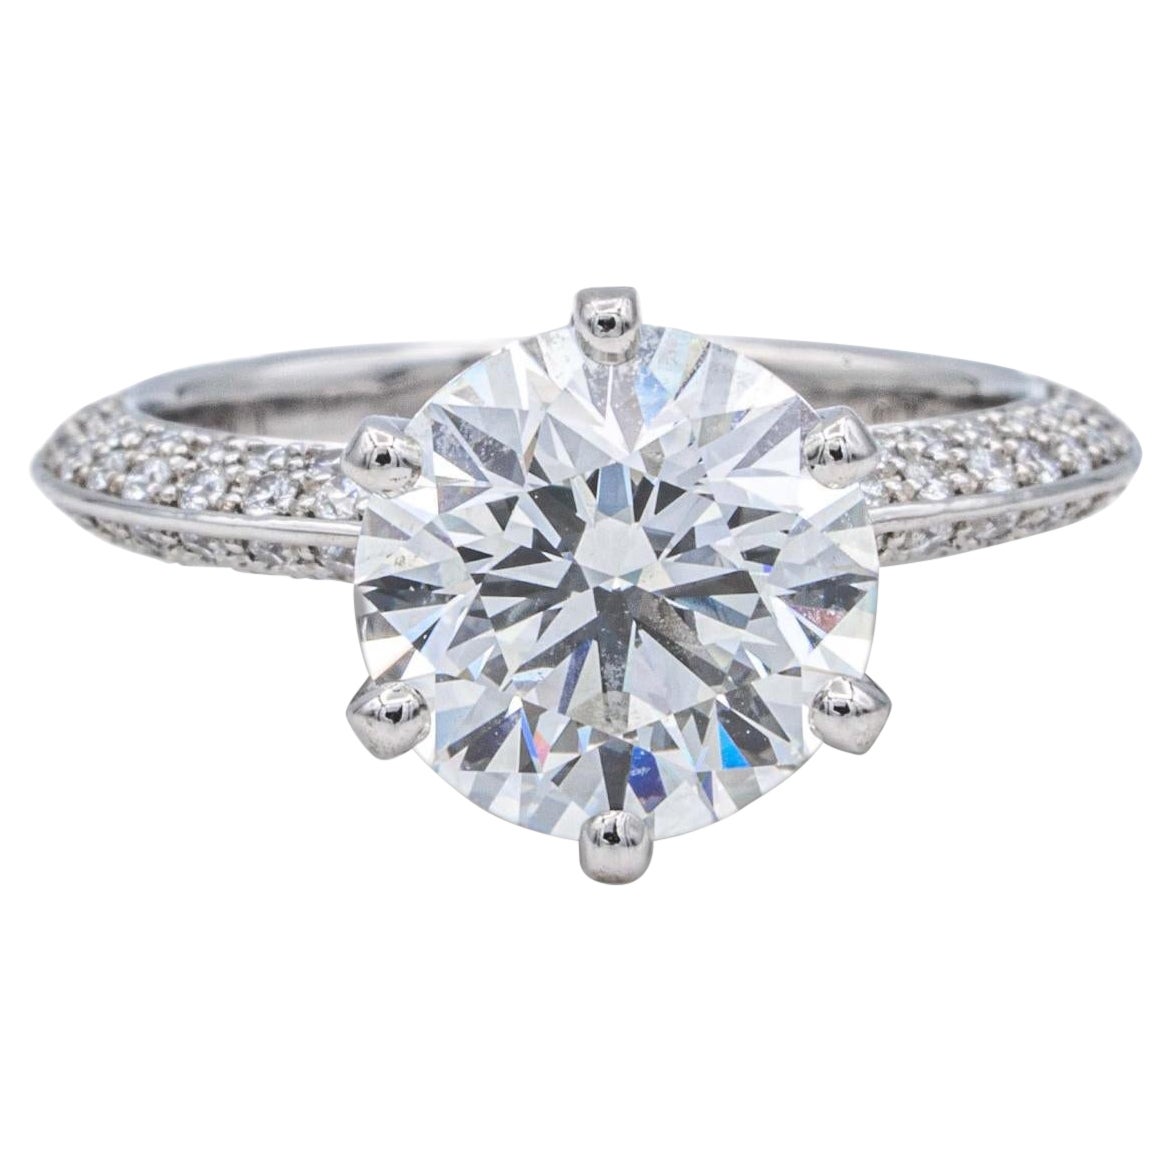 Tiffany & Co. Pave Platinum Setting Diamond Engagement Ring 2.39 Cts. Total HVVS